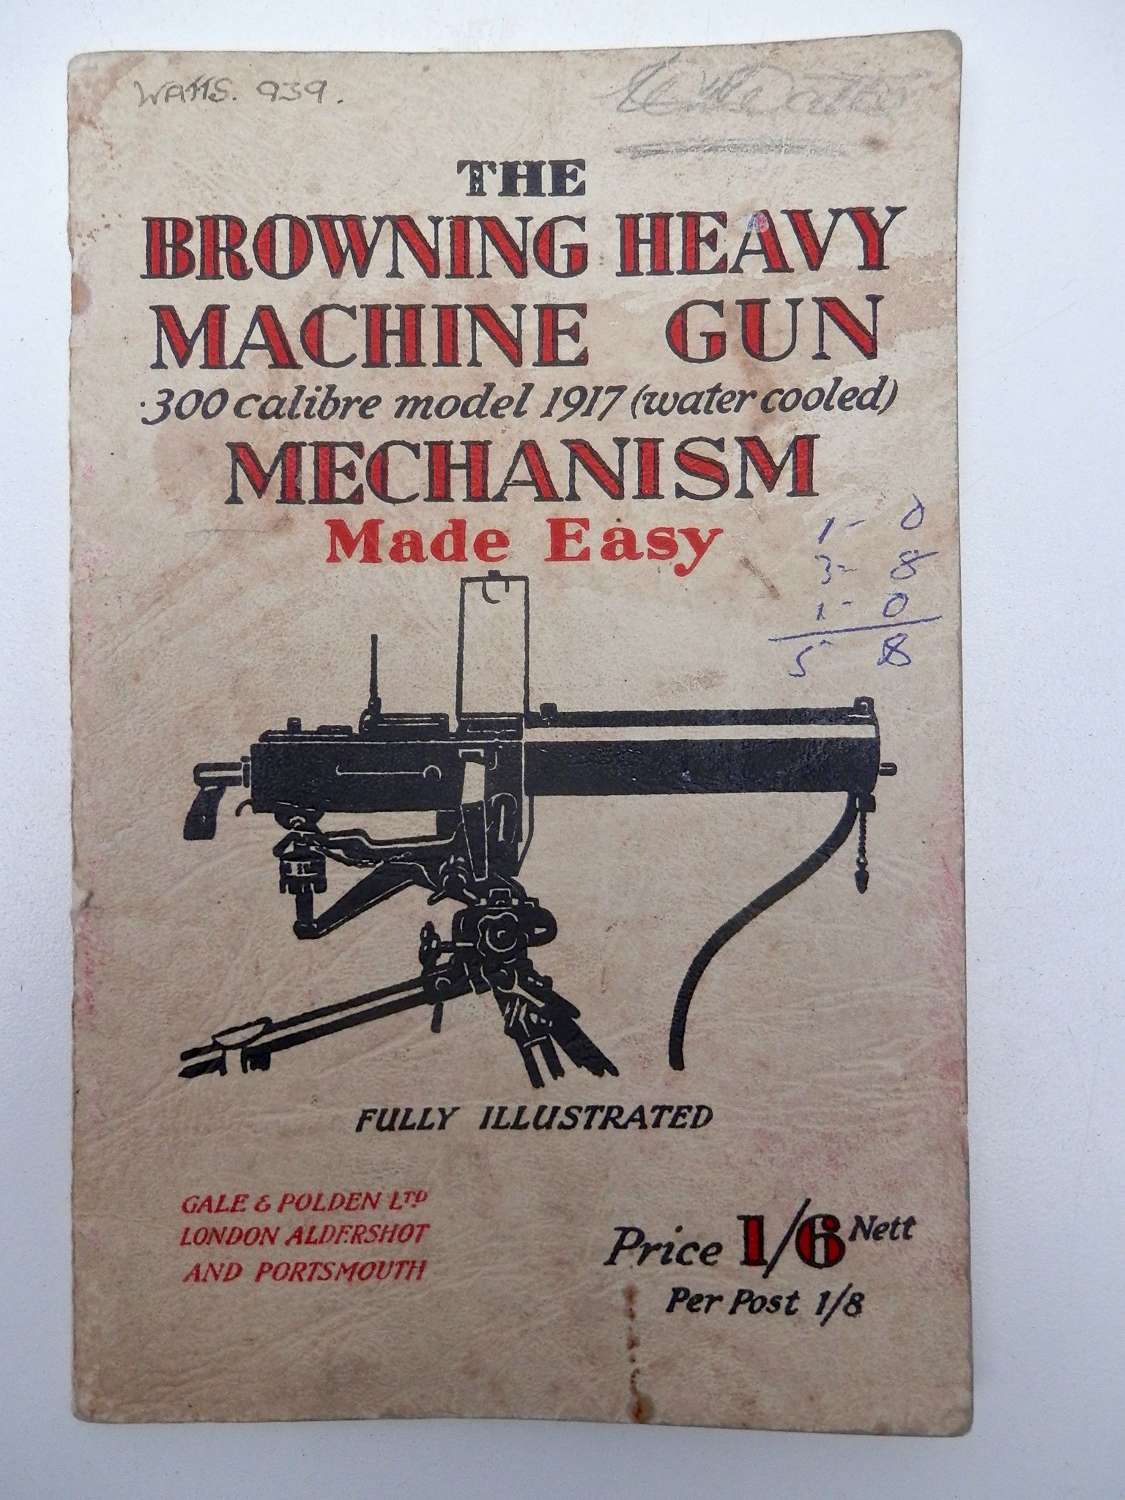 Browning heavy machine gun manual